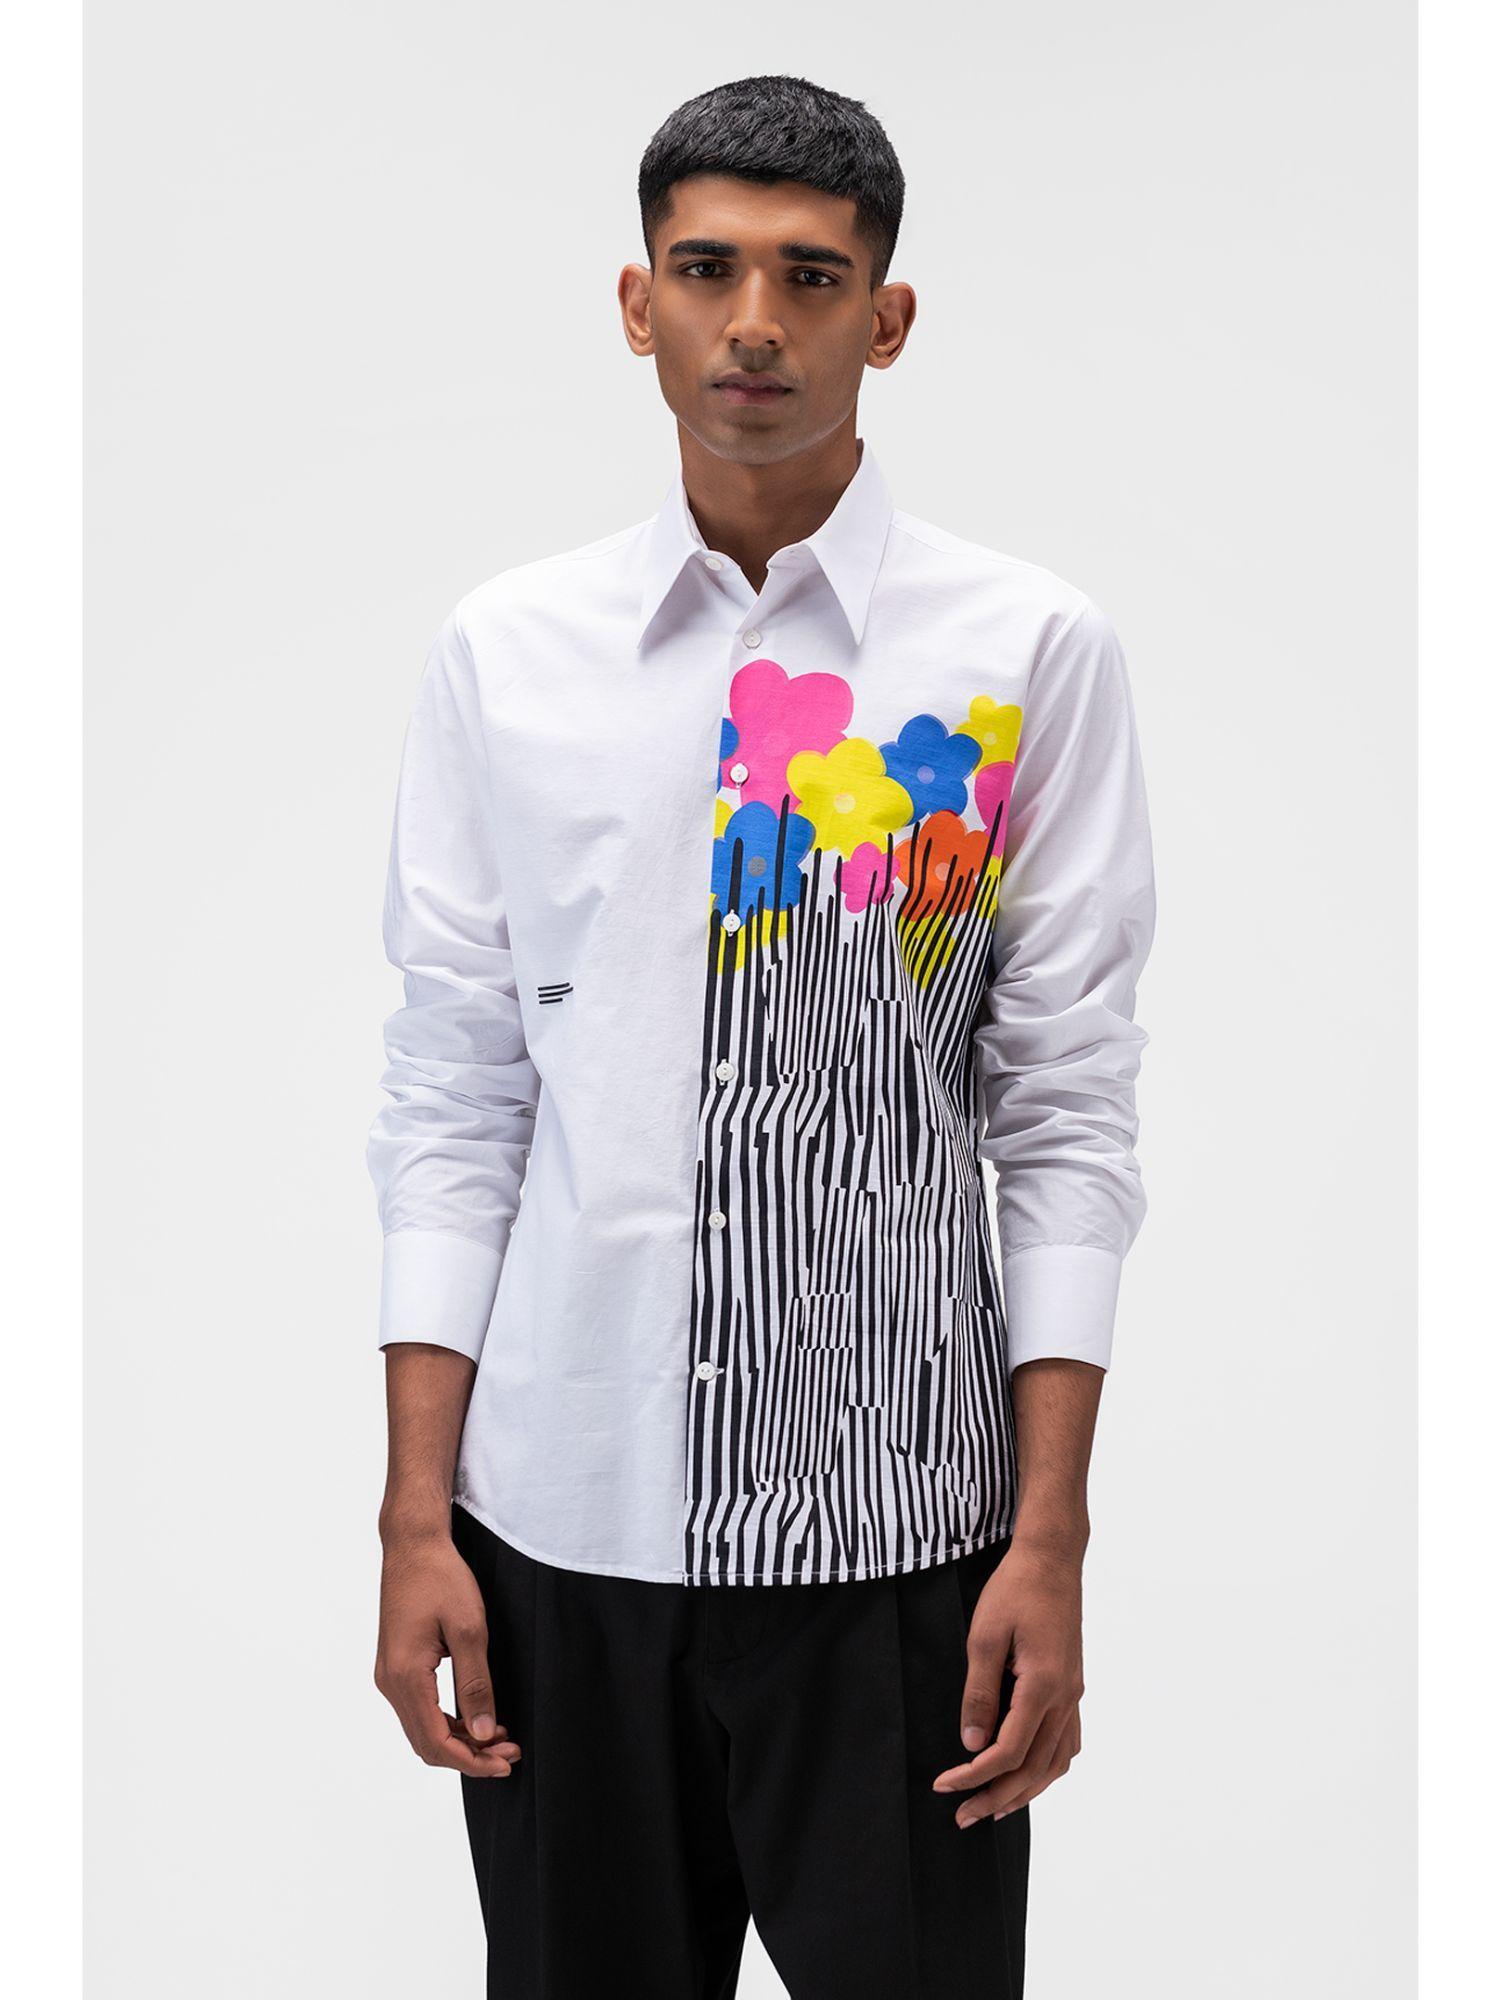 floral collage mens shirt